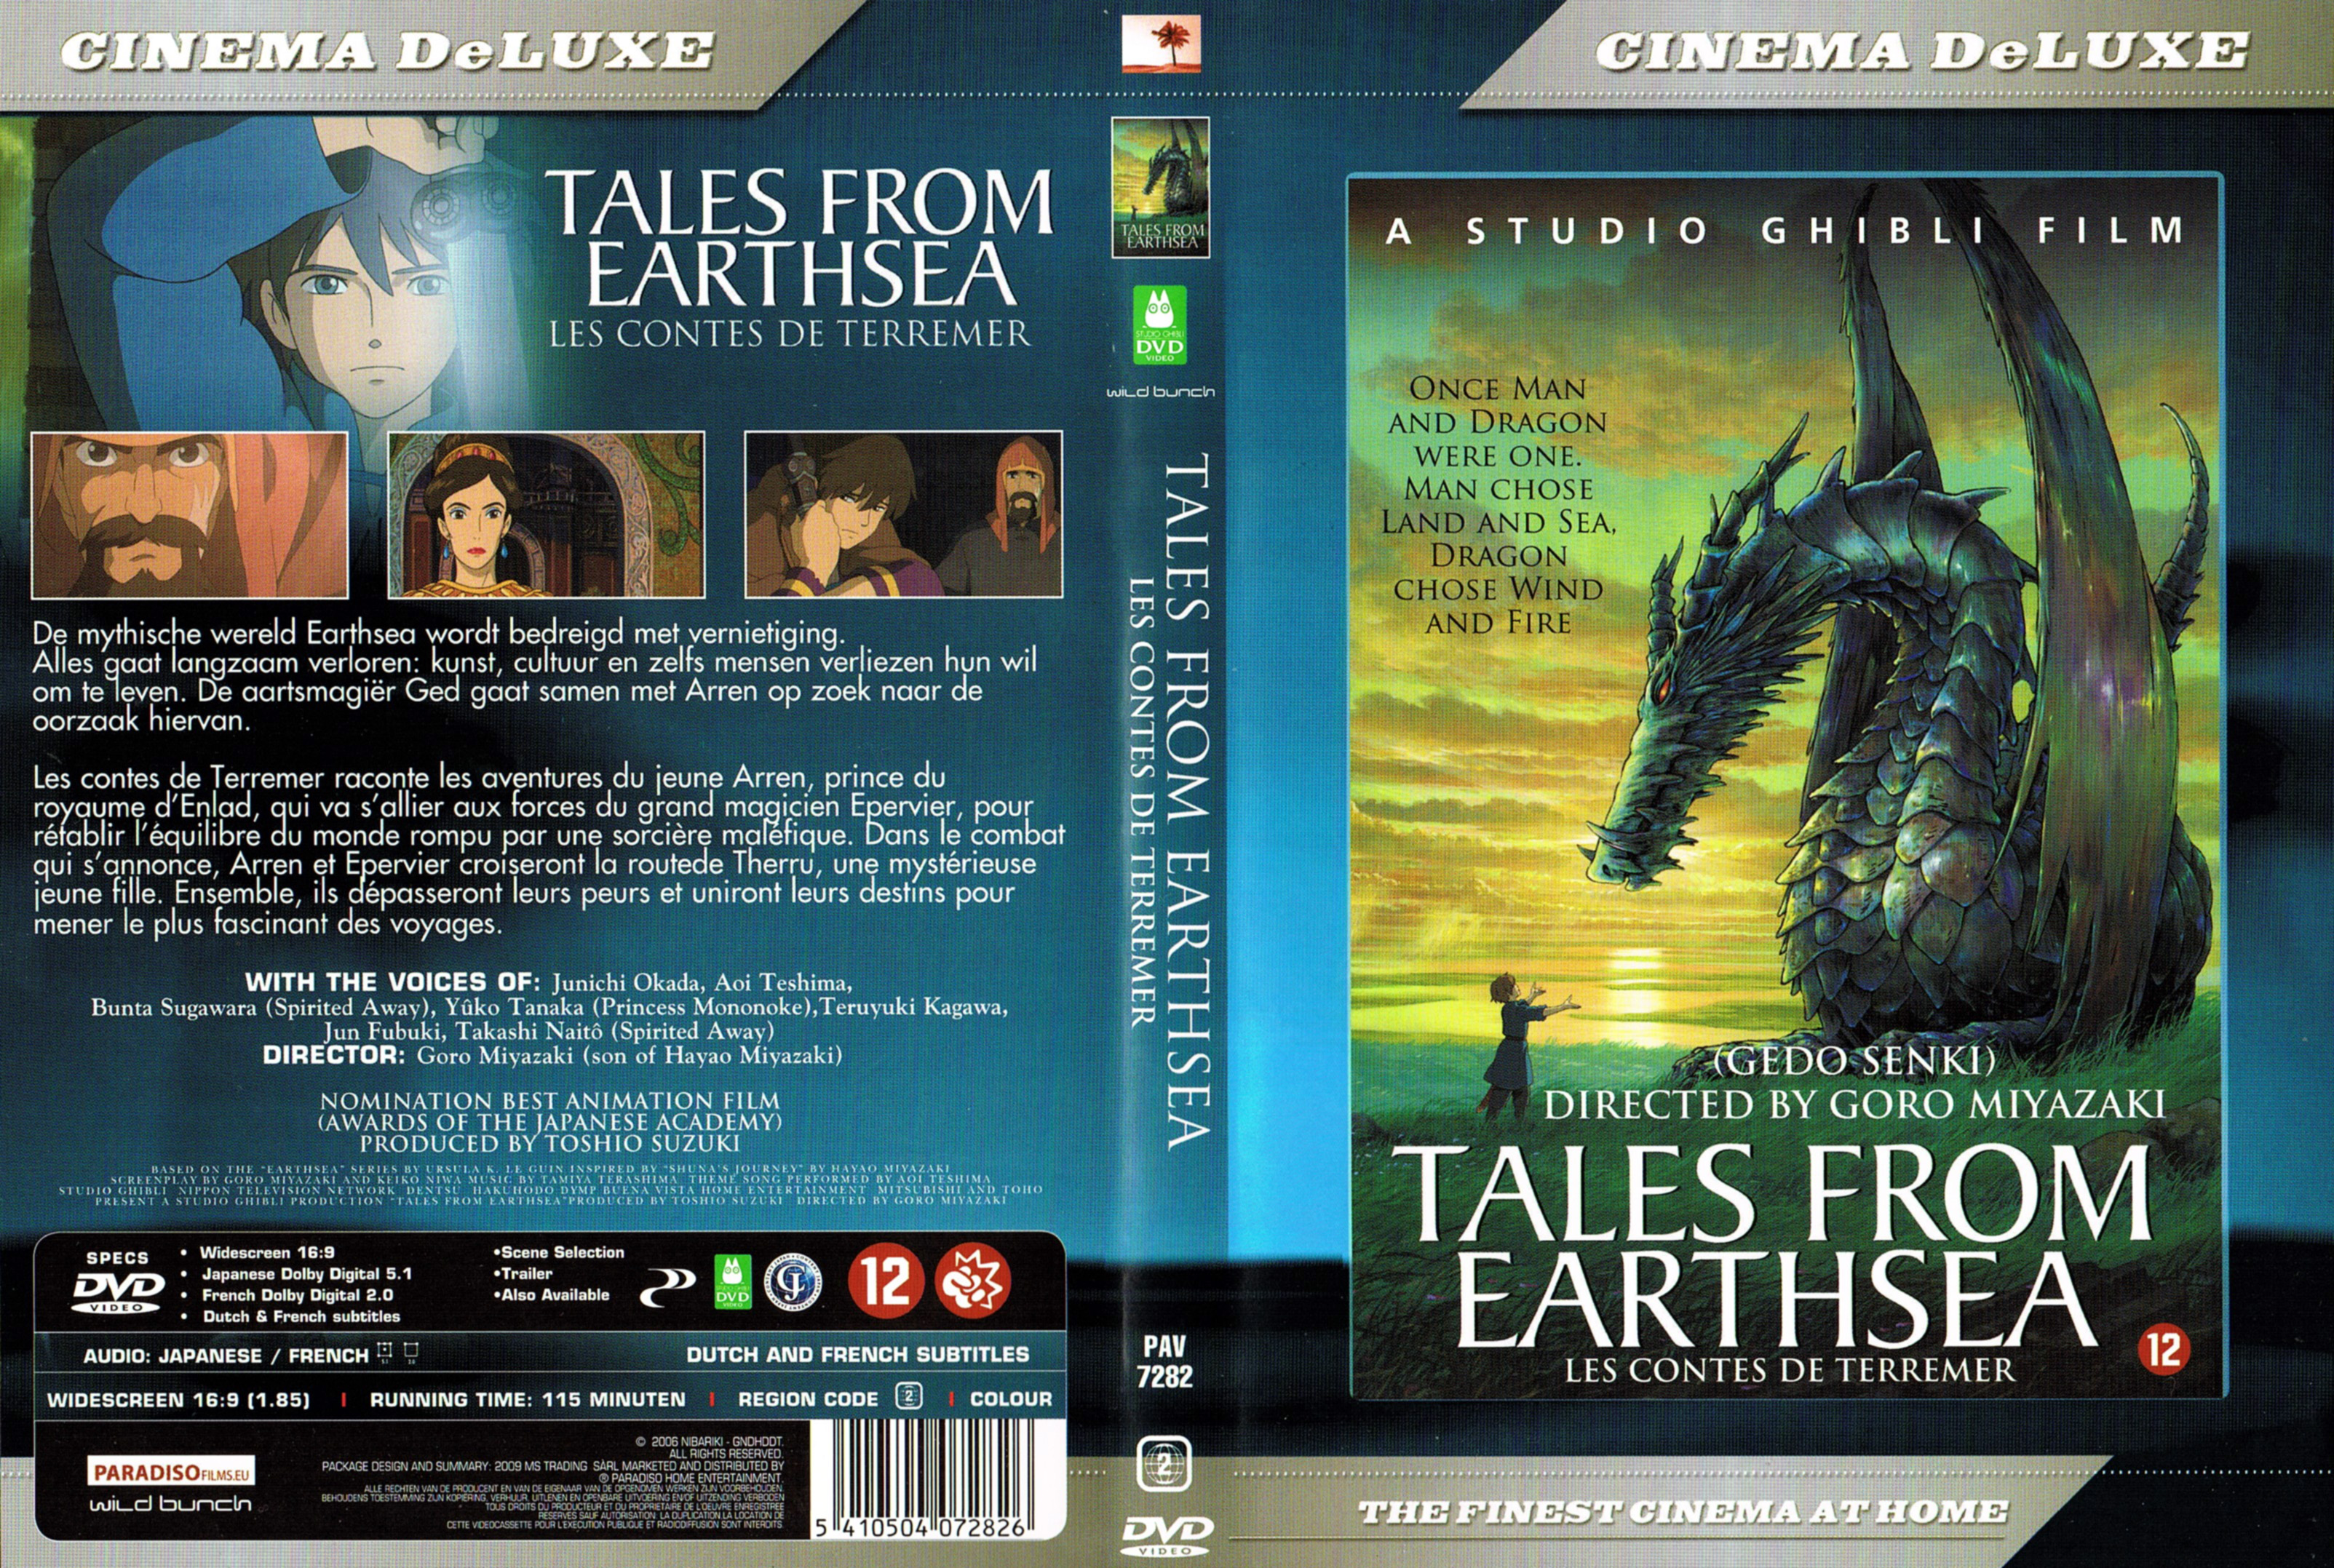 Jaquette DVD Tales from earthsea - Les contes de Terremer